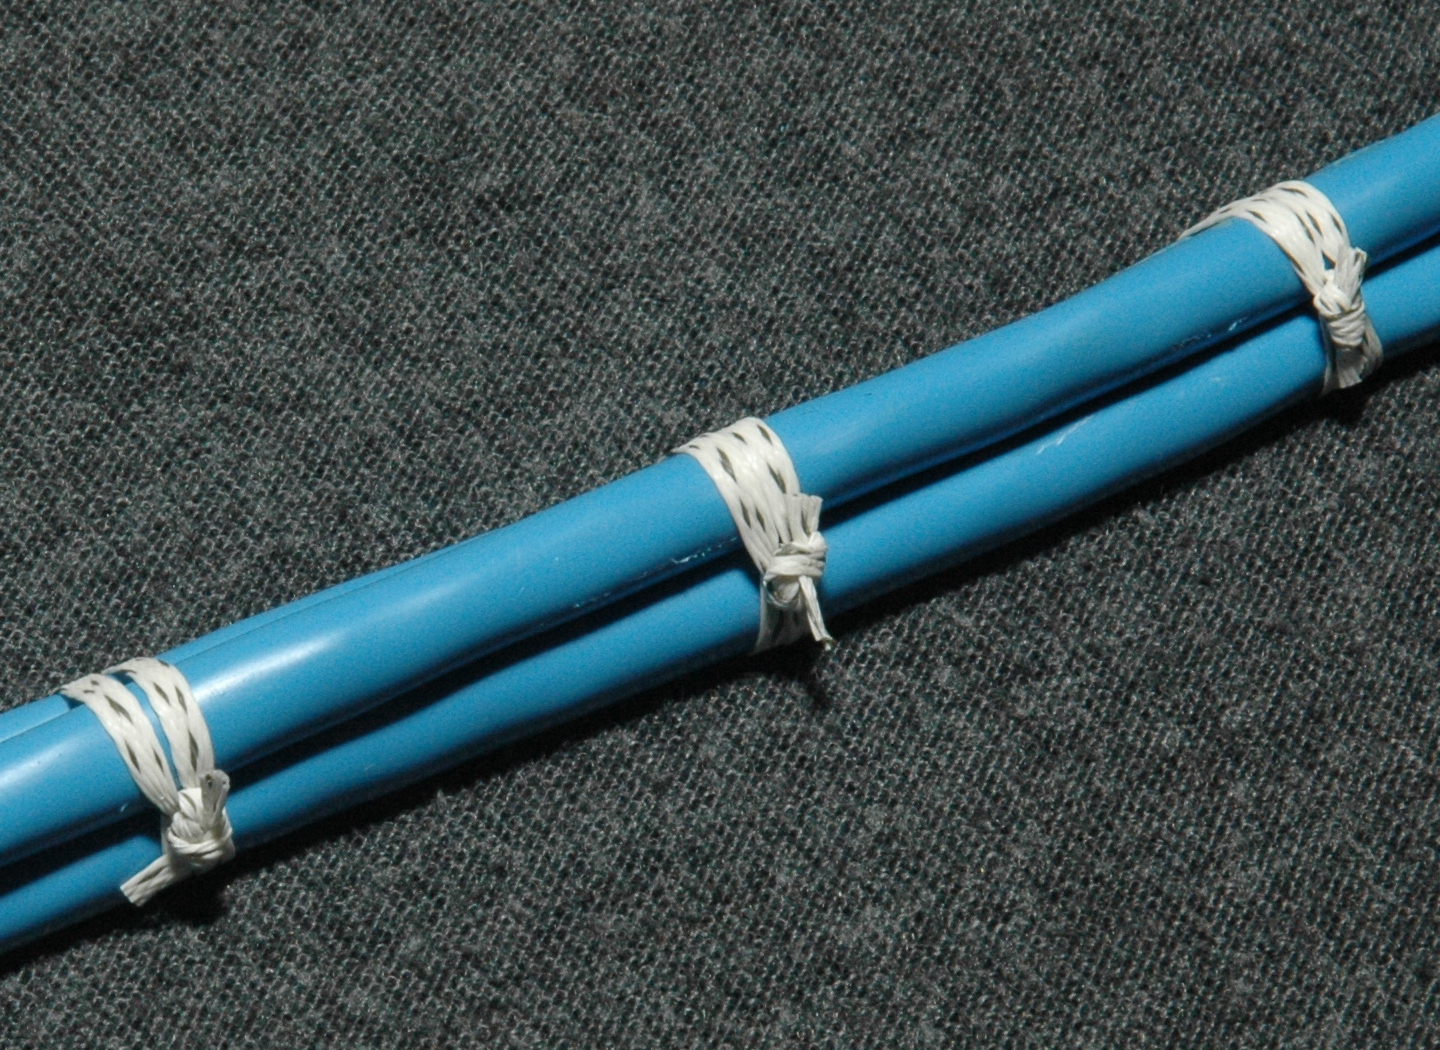 File:Cable-lacing-nasa-style-spot-ties.jpg - Wikipedia